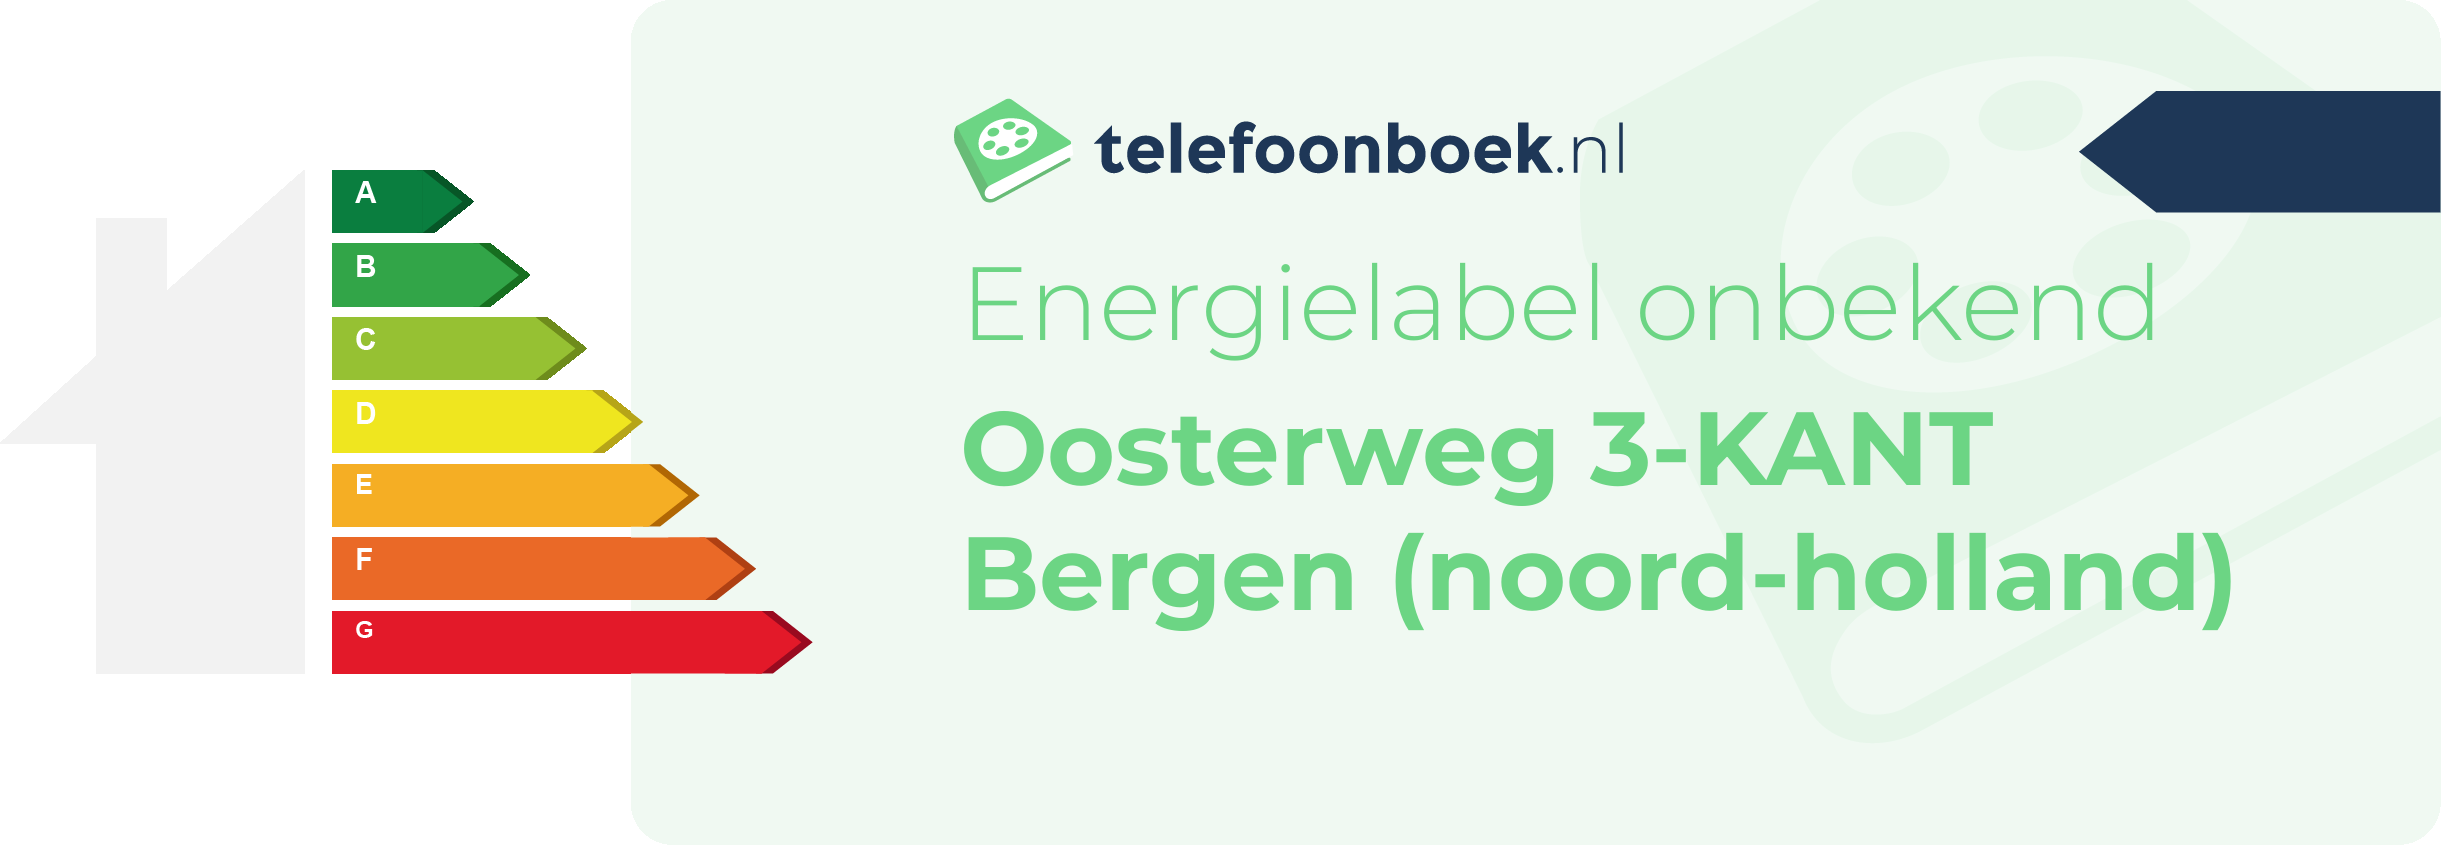 Energielabel Oosterweg 3-KANT Bergen (Noord-Holland)